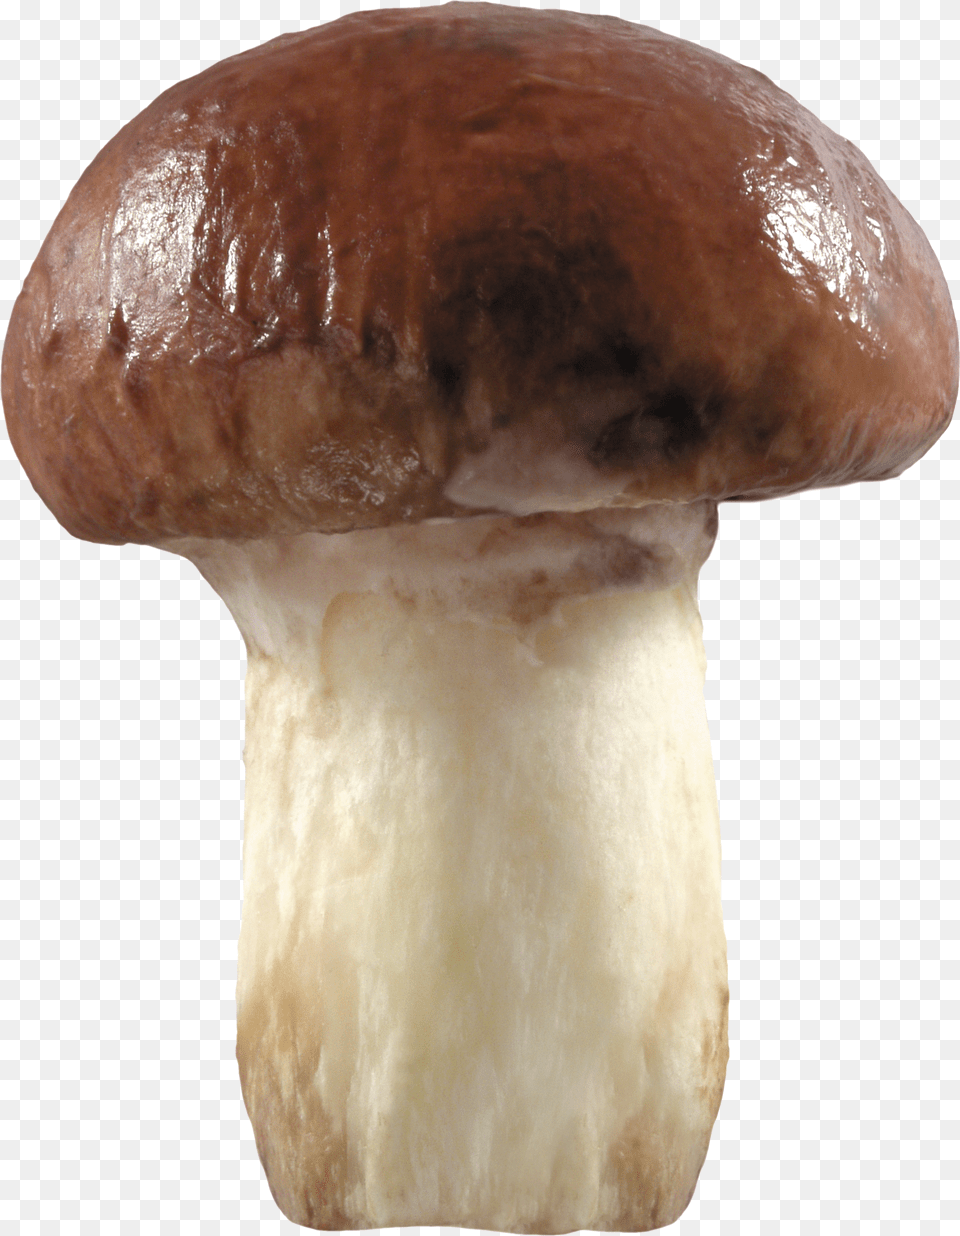 Mushroom Free Transparent Png